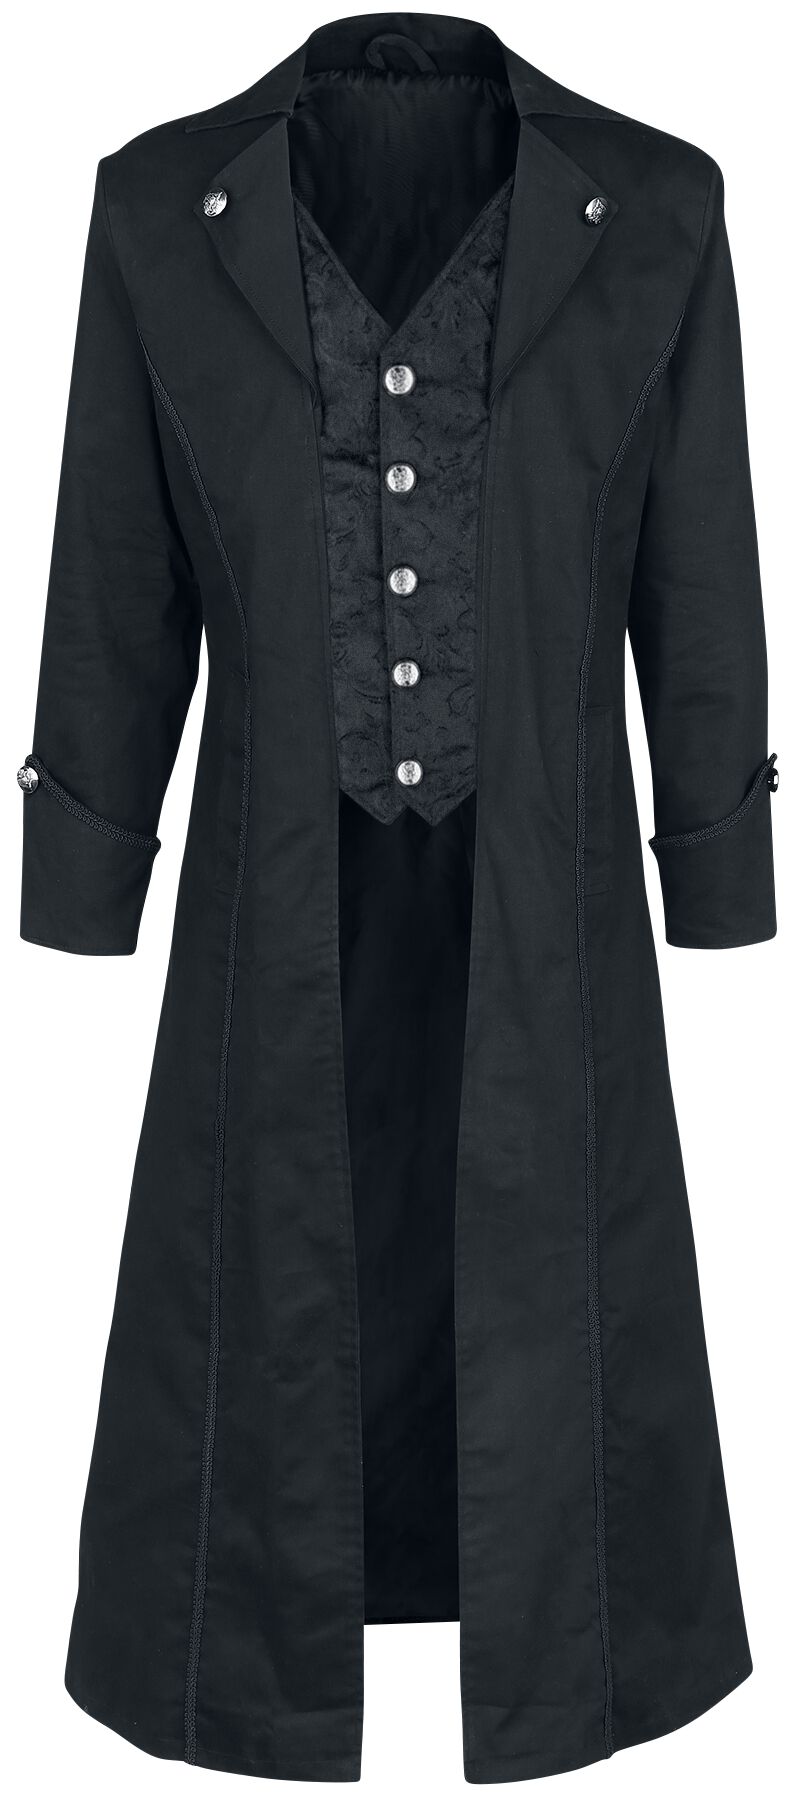 Altana Industries Dark Brocade Coat Army Coat black